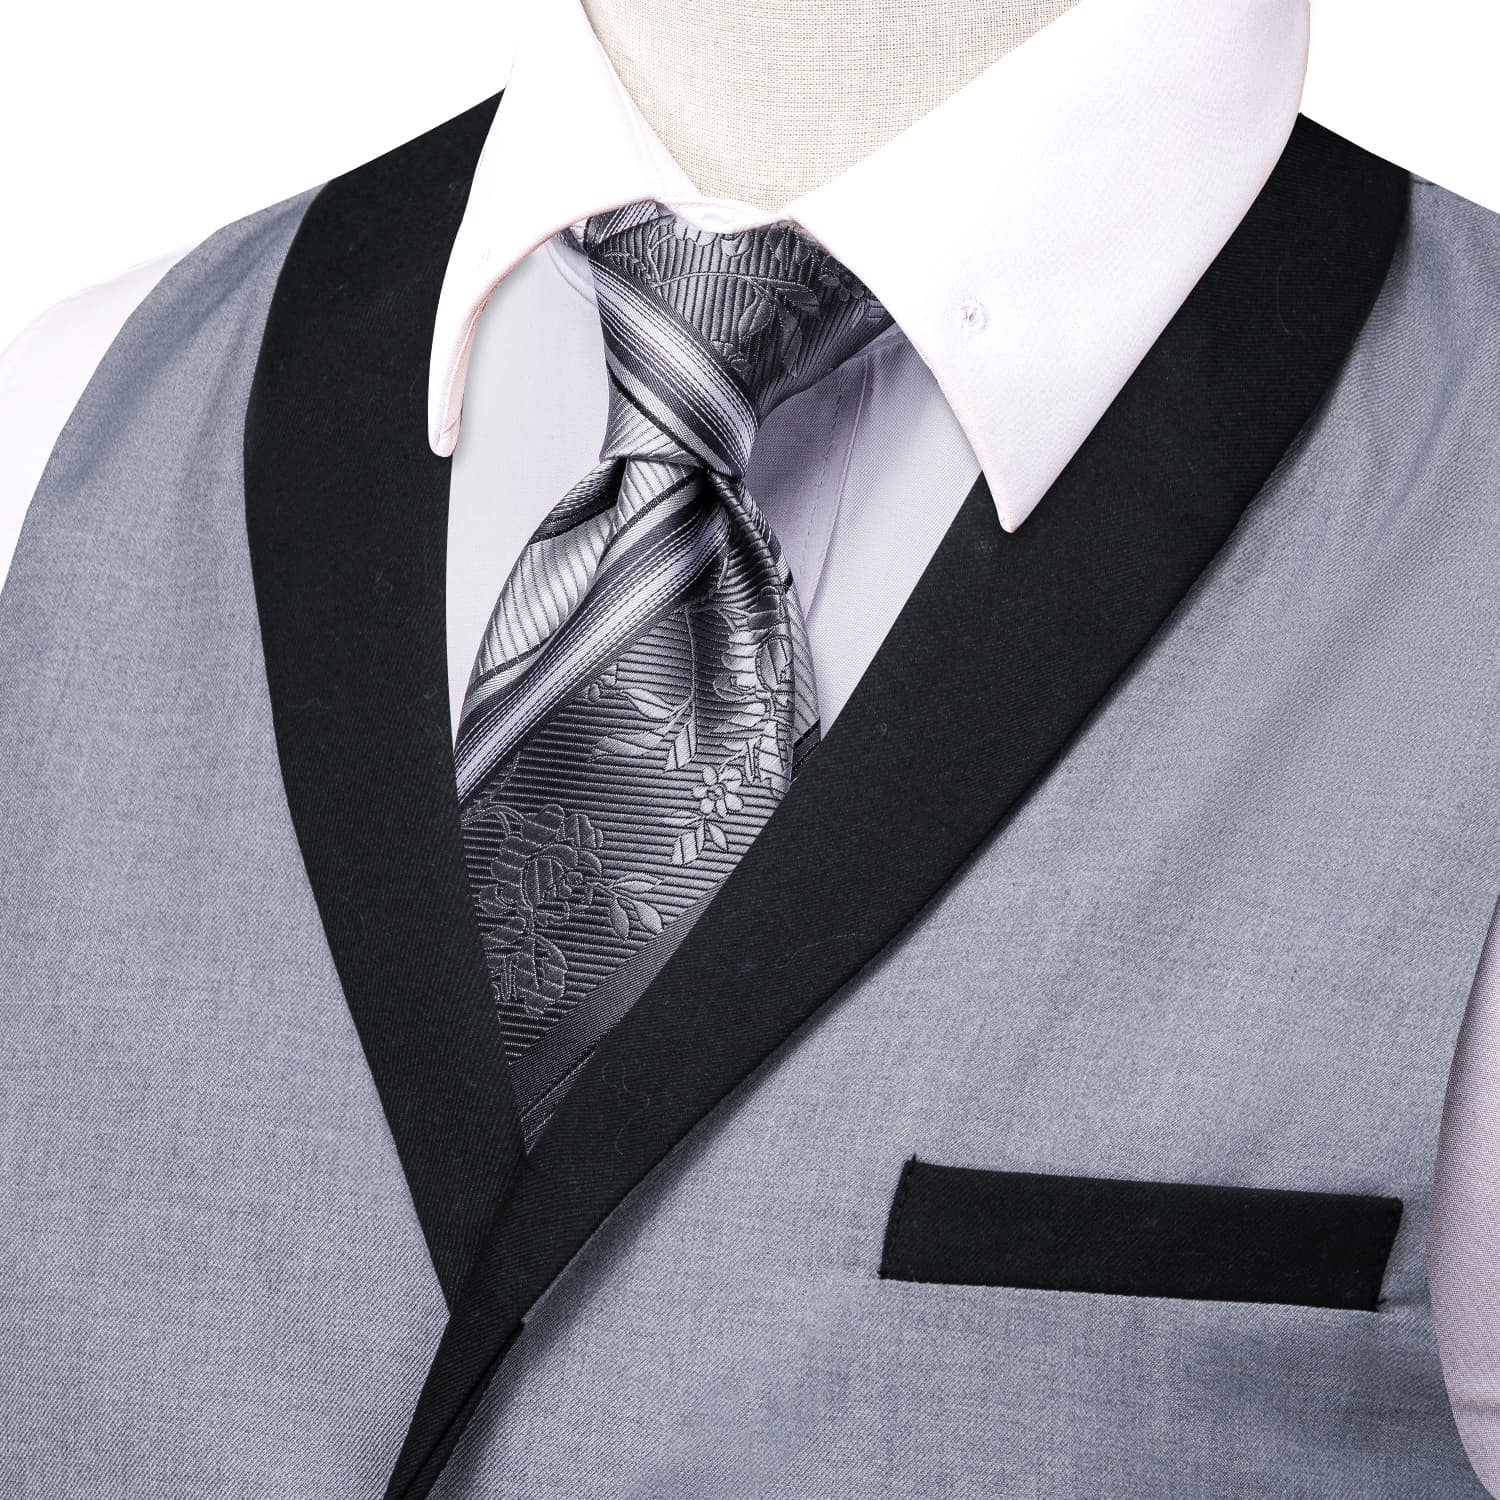 Hi-Tie Black Shawl Collar Grey Solid Waistcoat Formal Vests for Business